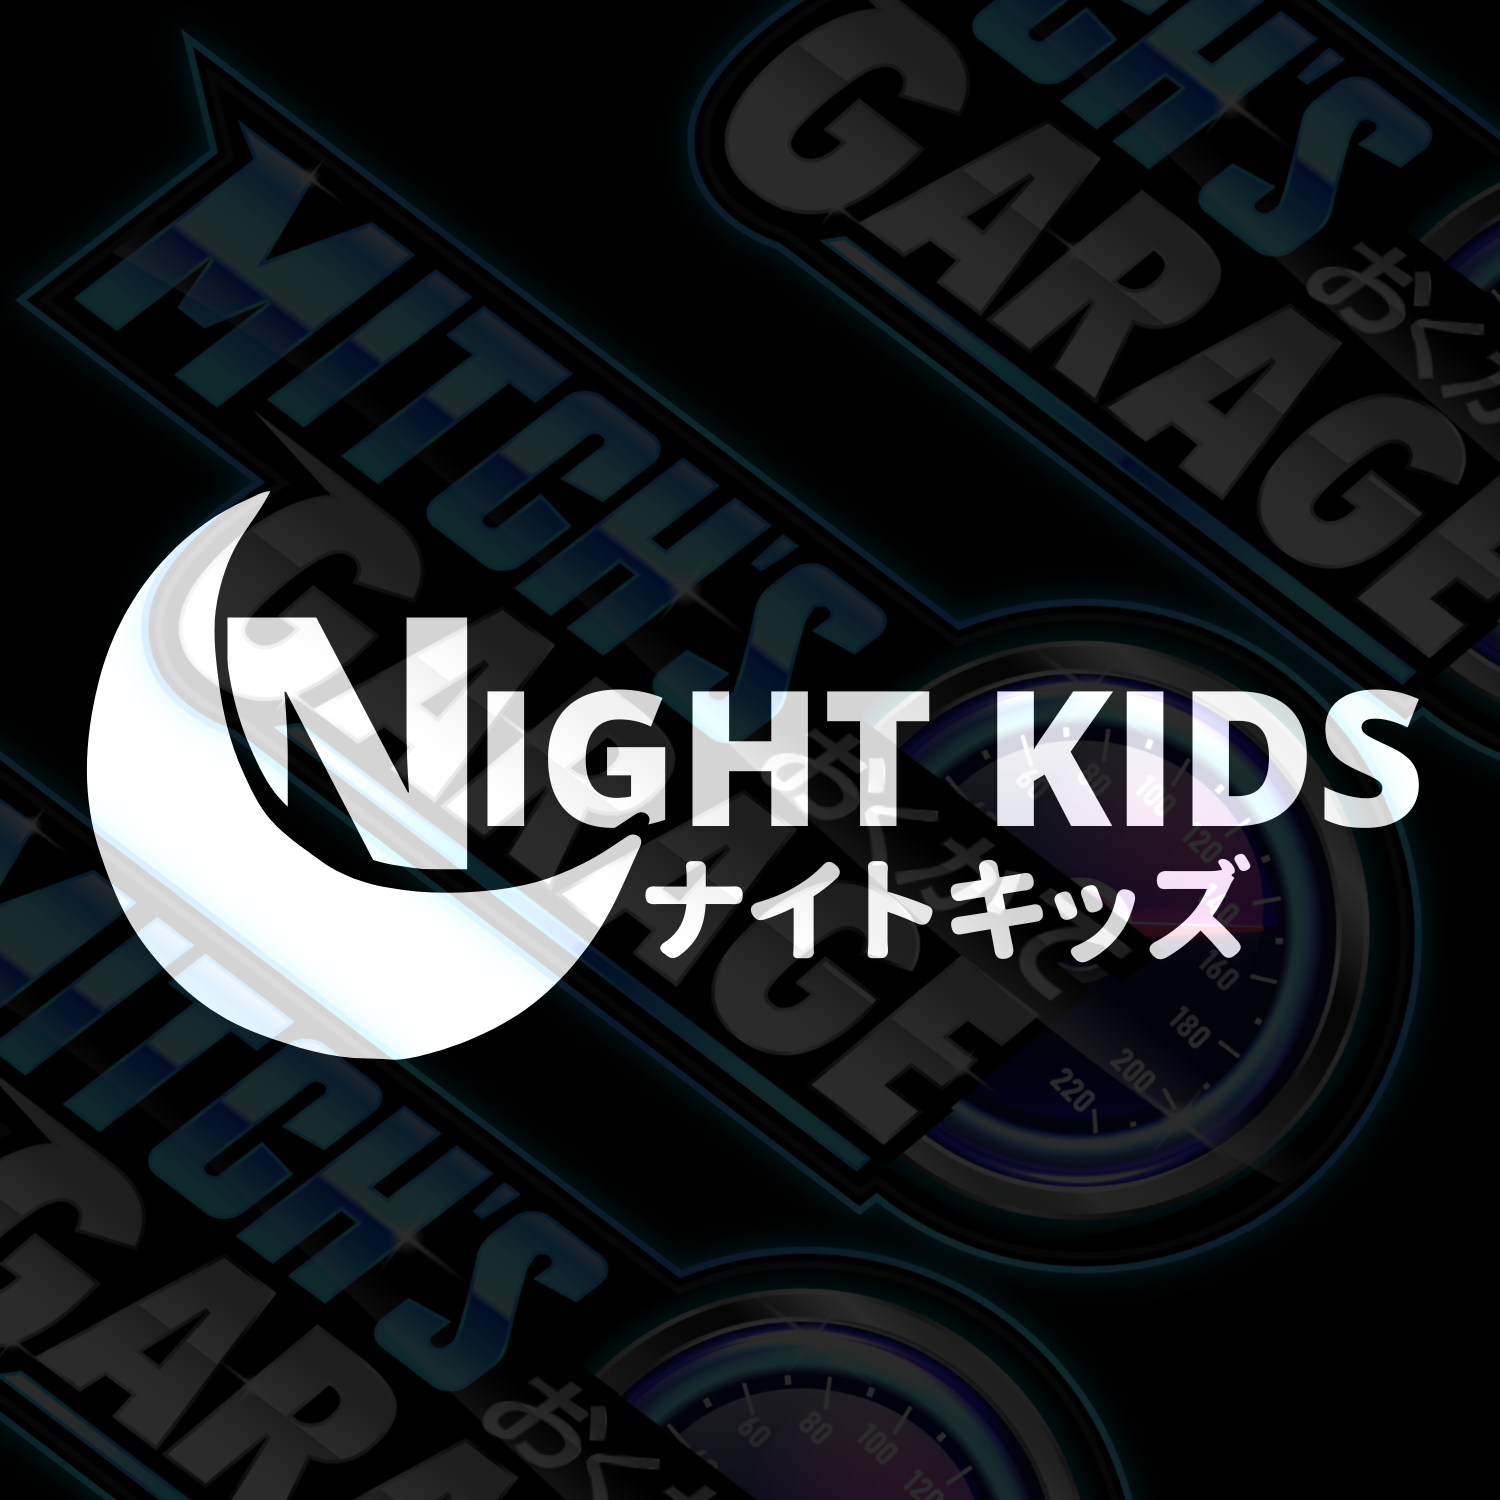 Night Kids Vinyl Decal